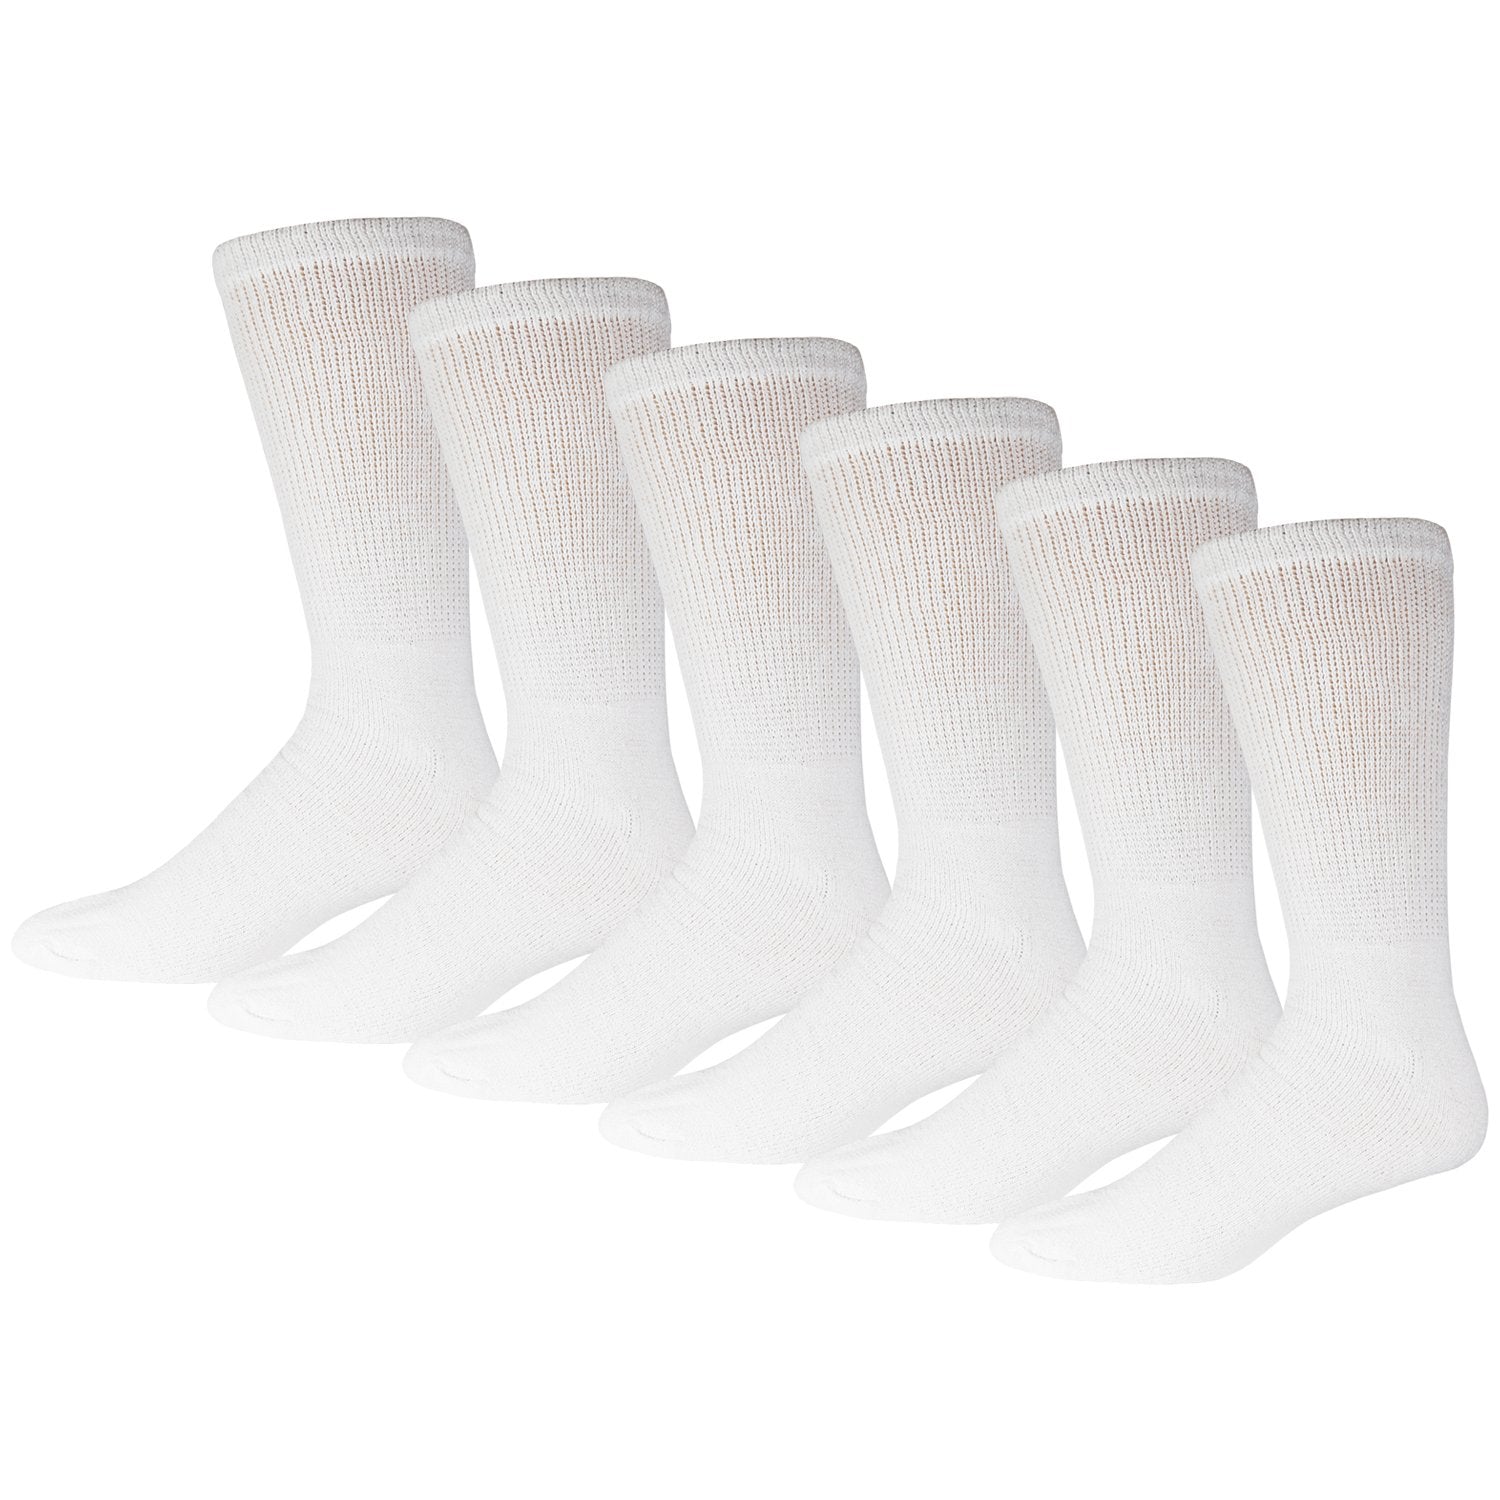 Ladies White Diabetic Socks Of Crew Length With Loose Top 6 Pack